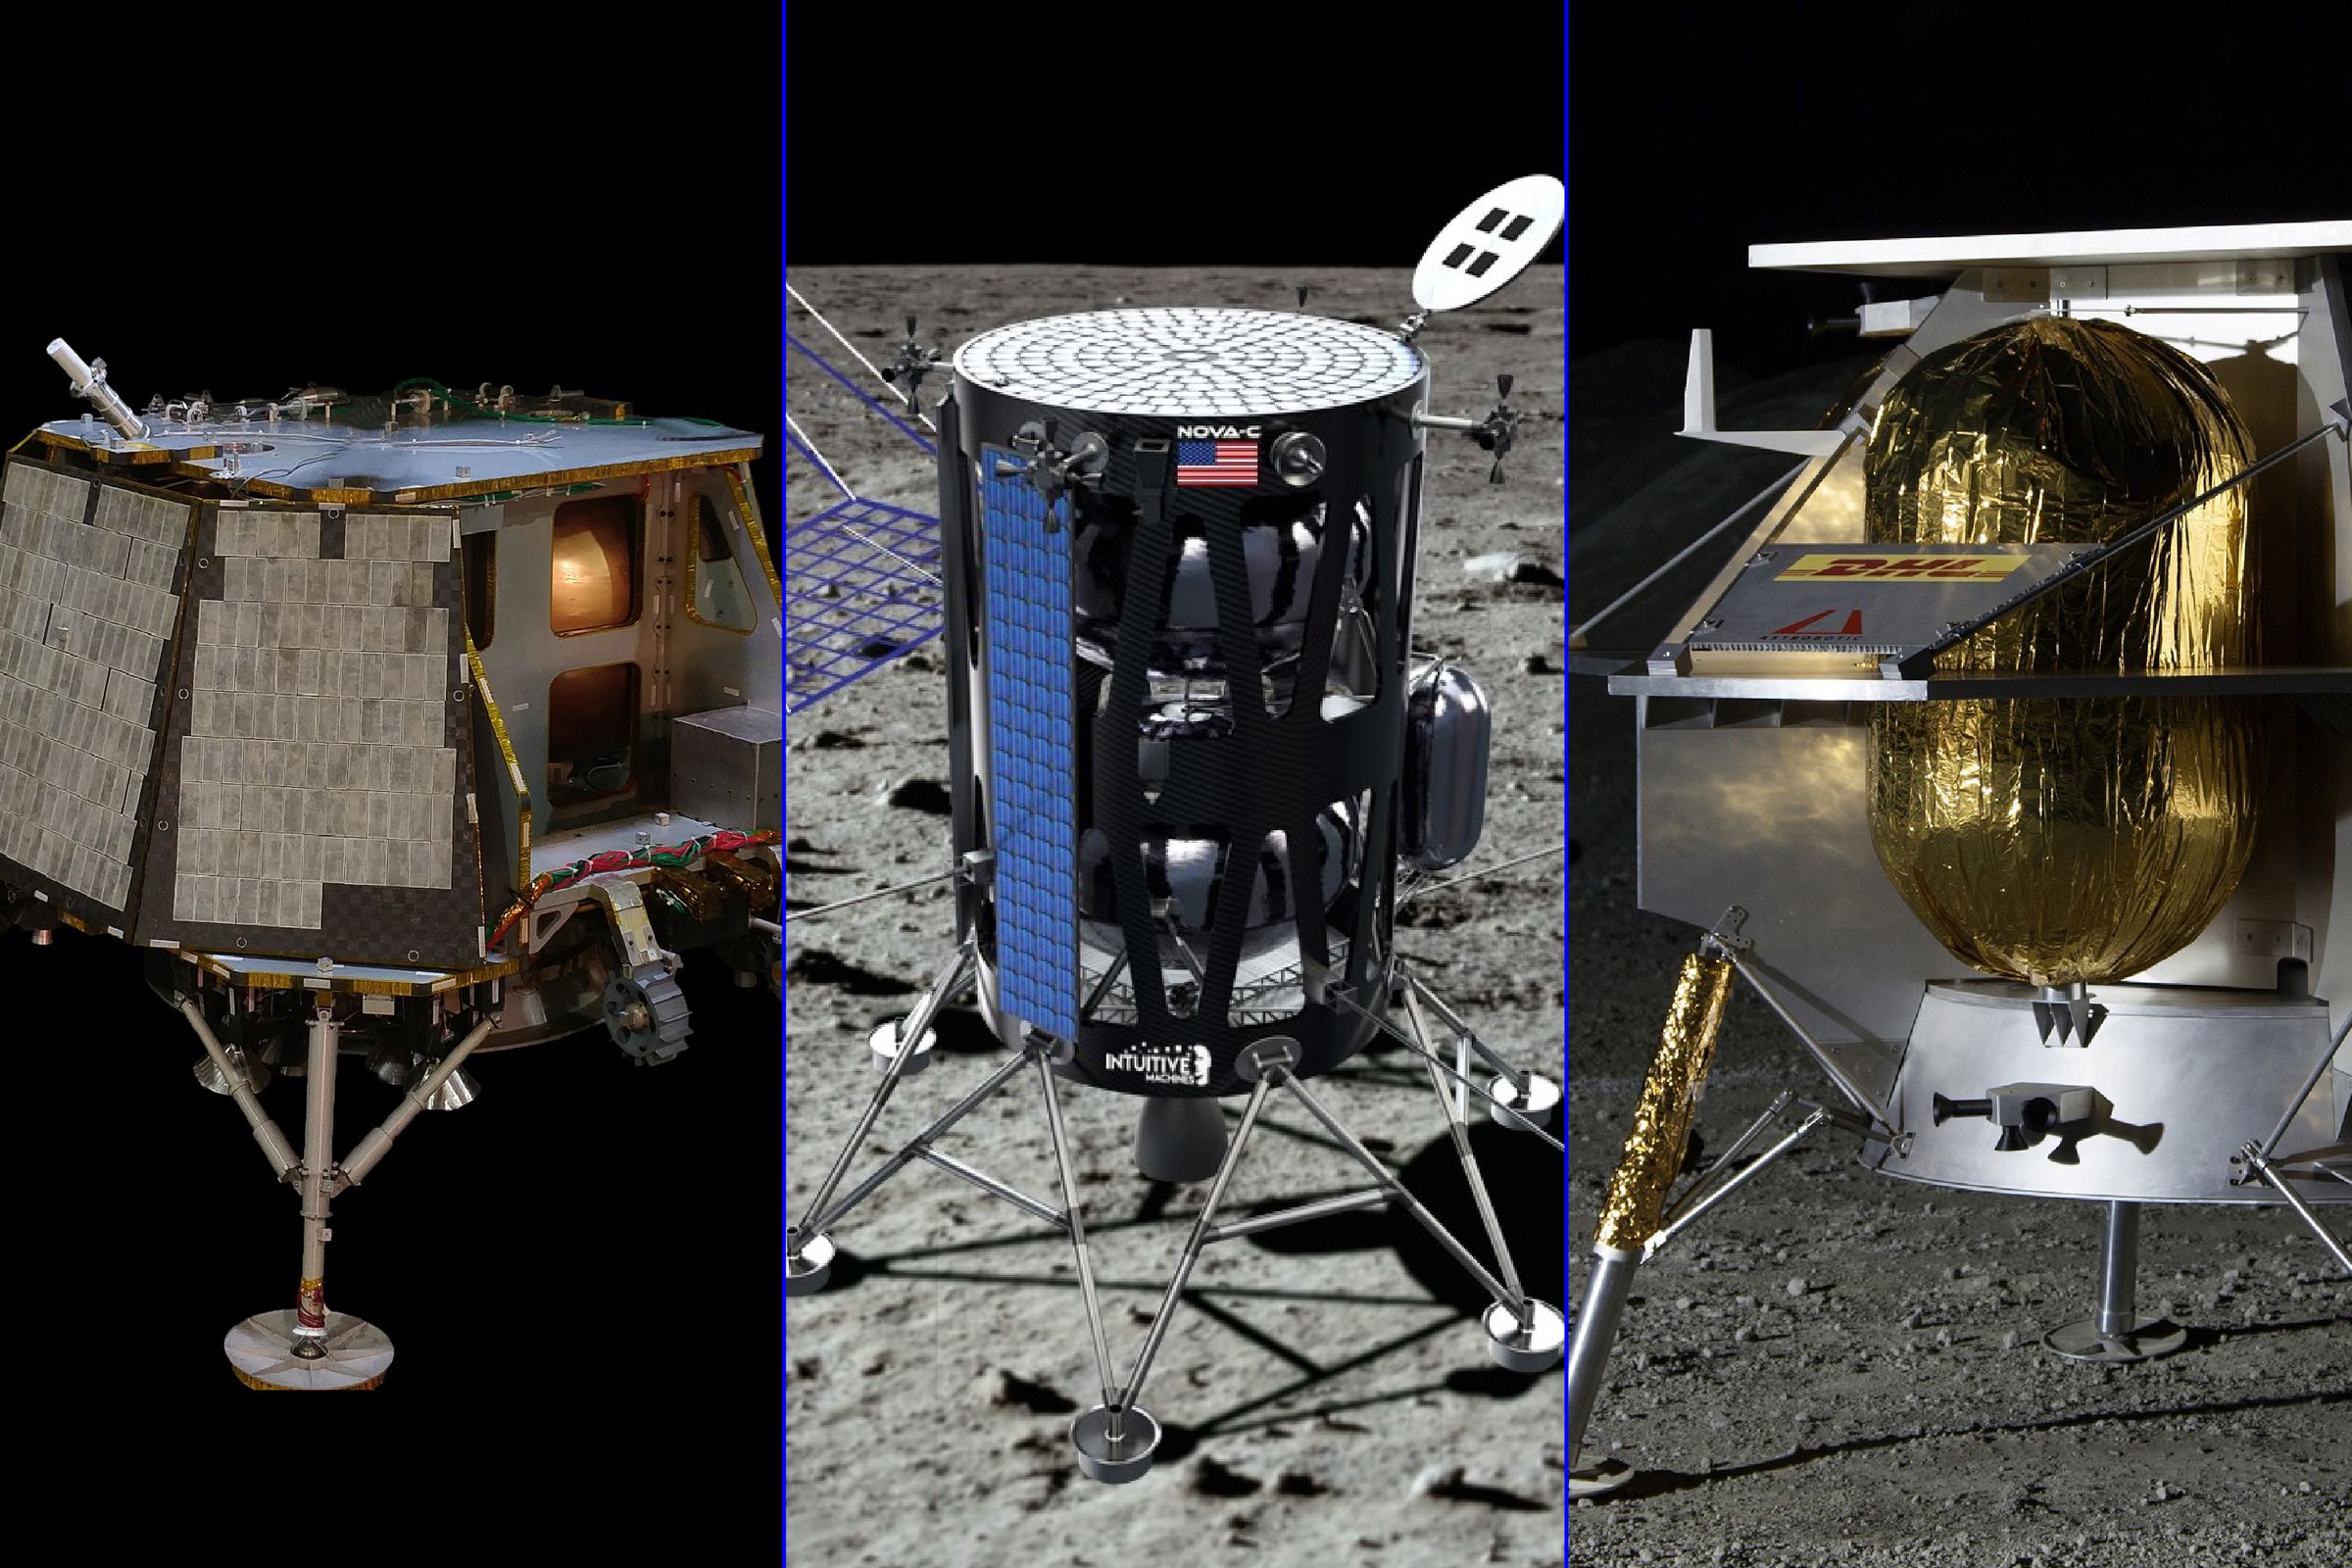 Orbit Beyond’s lander (L), Intuitive Machines’ lander (C), and Astrobotic’s lander (R).